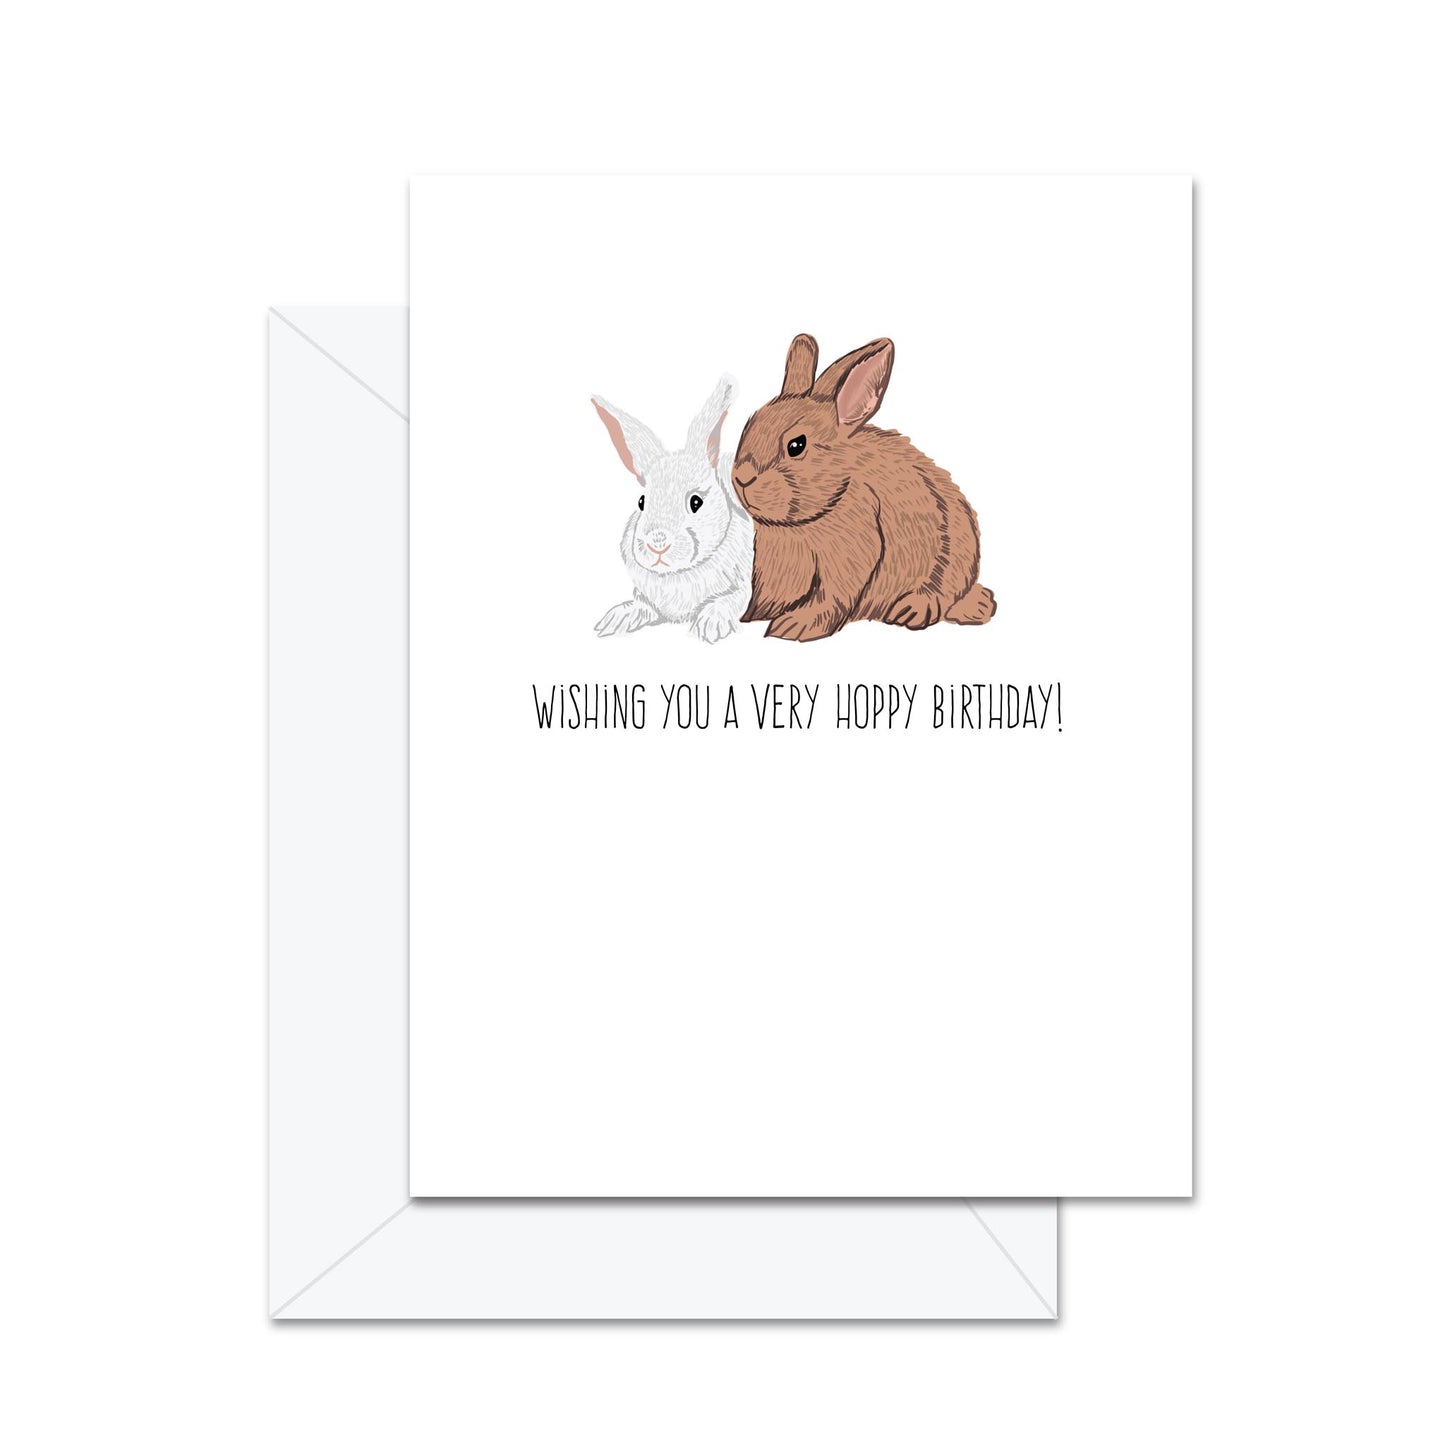 Wishing You A Very Hoppy Birthday! - Greeting Card